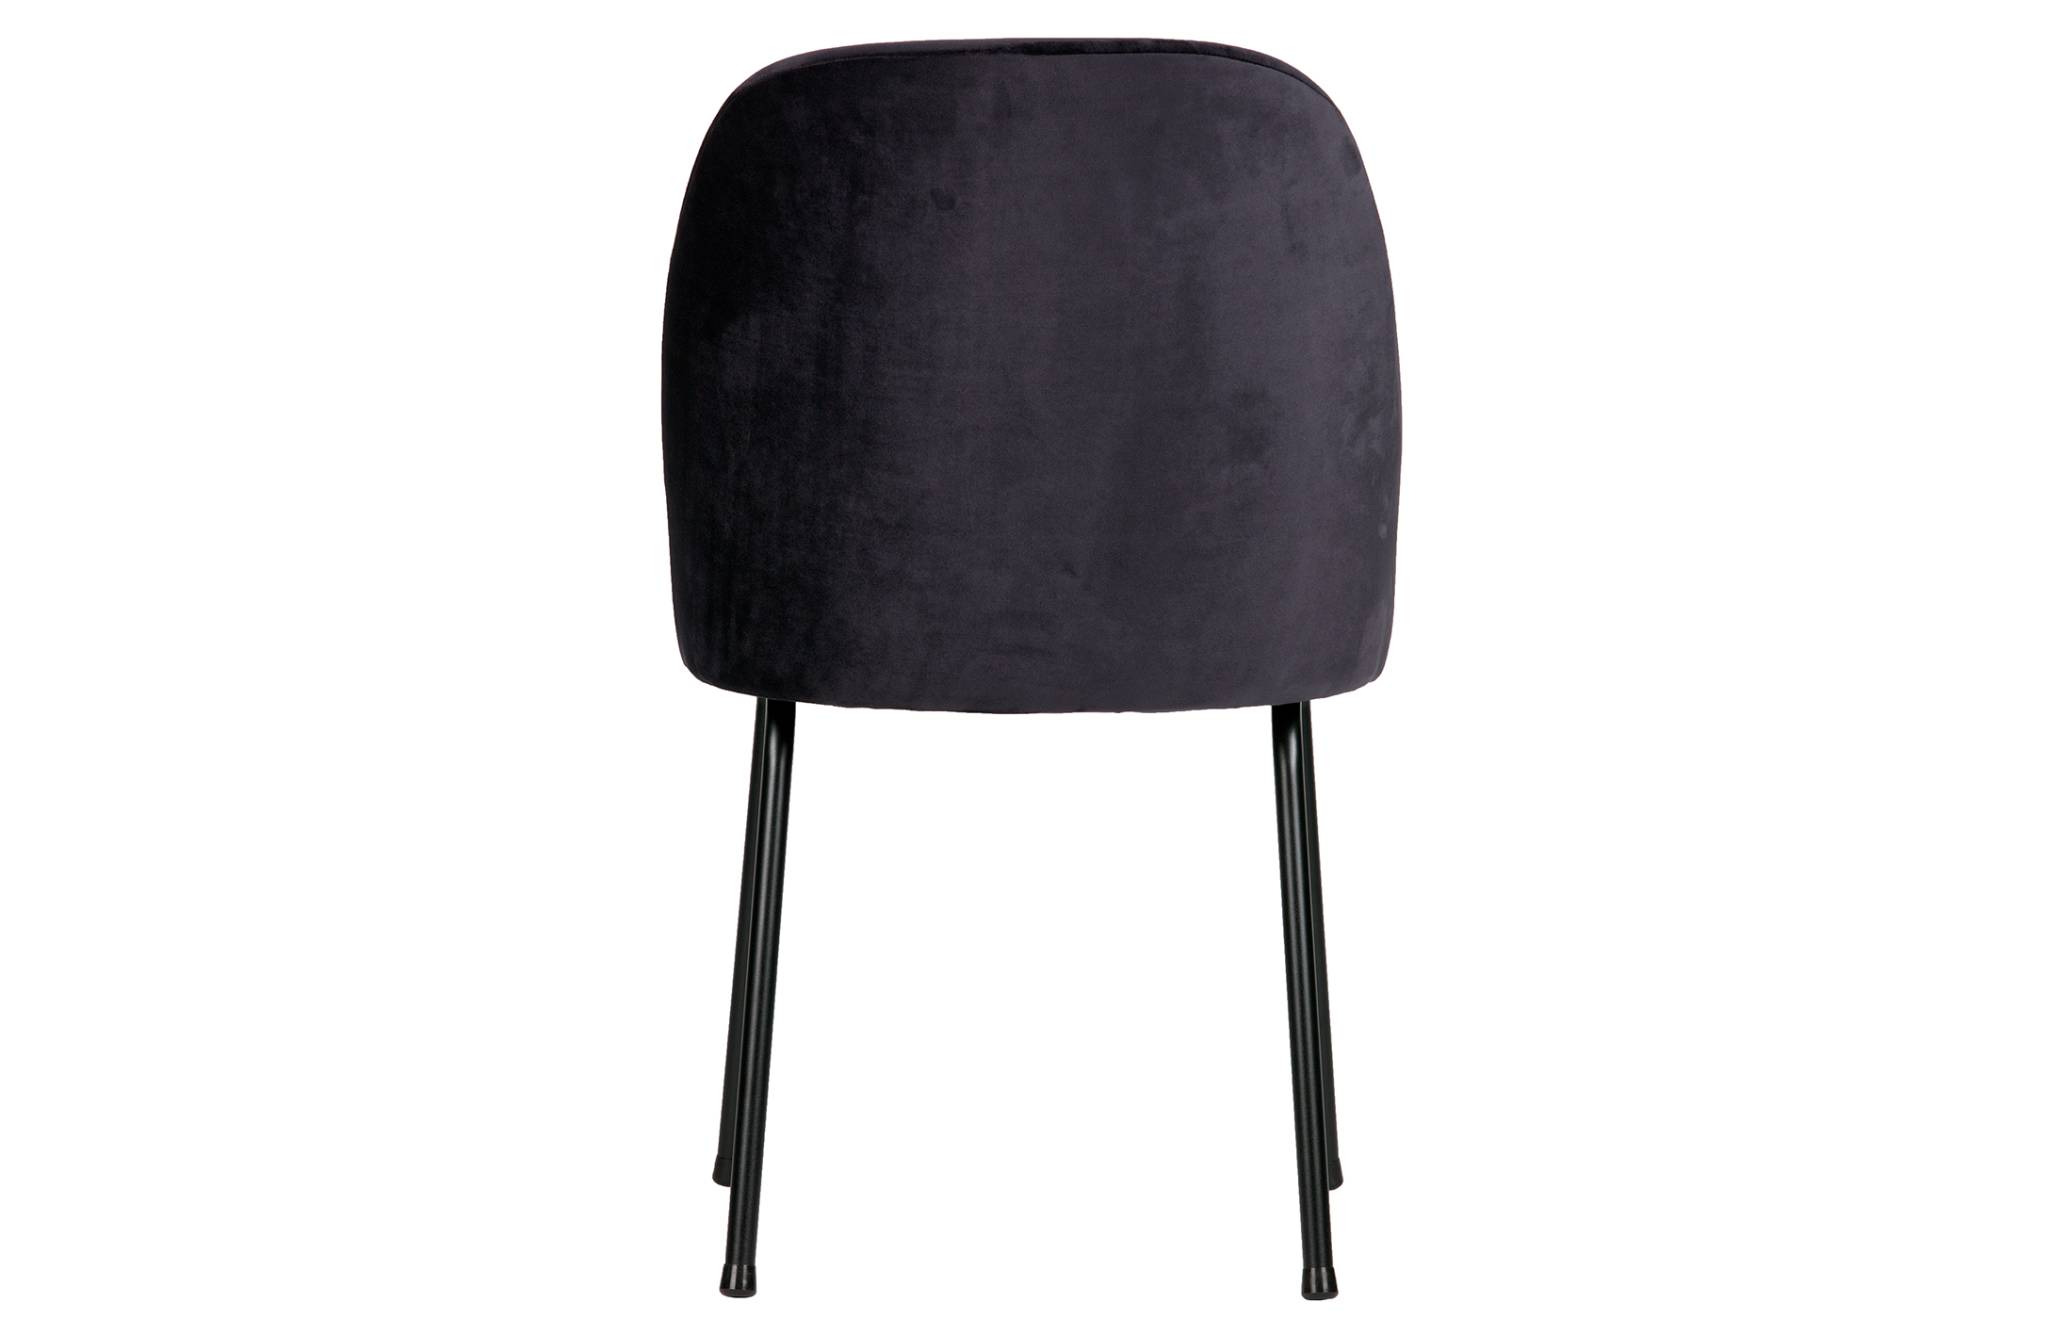 Chair Lote - Black